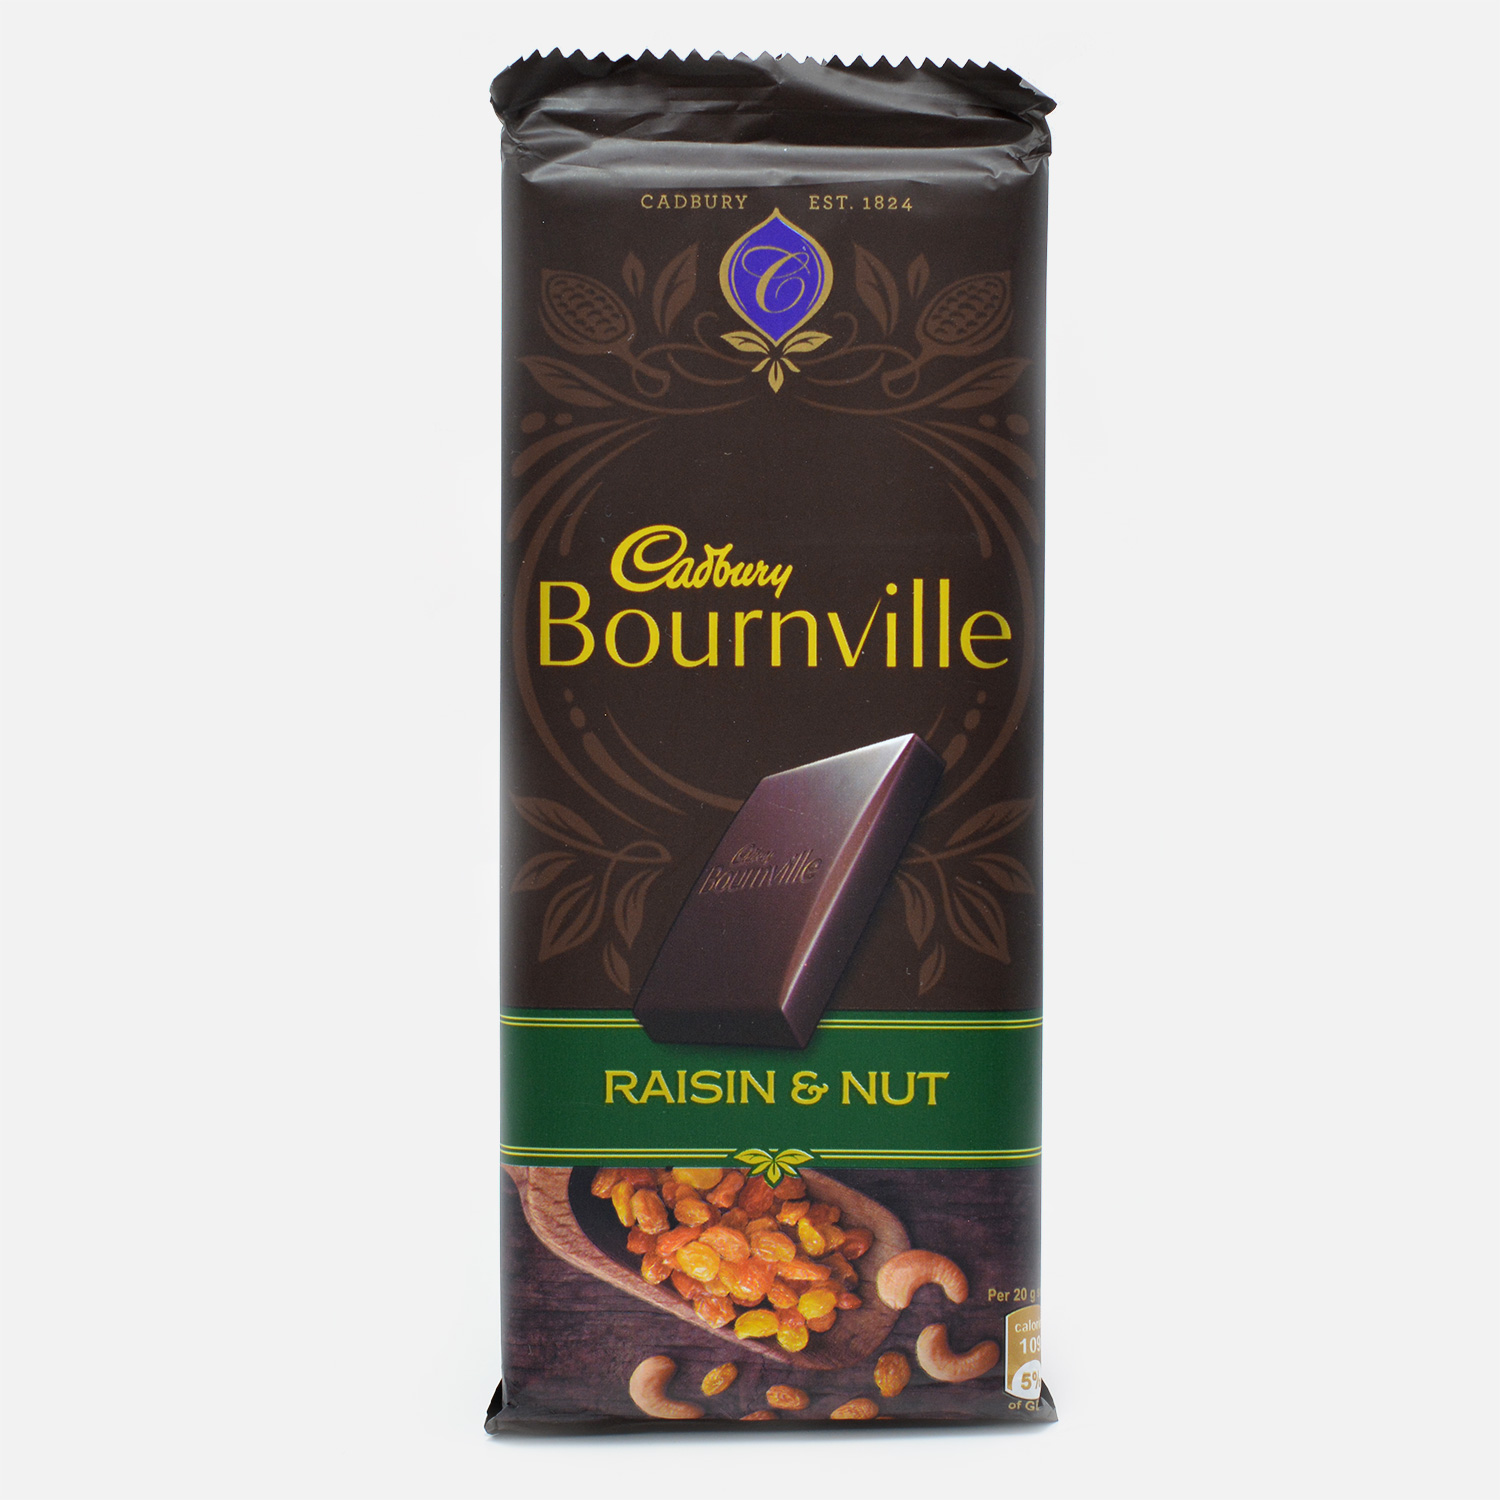 Cadbury Bournville Raisin and Nut